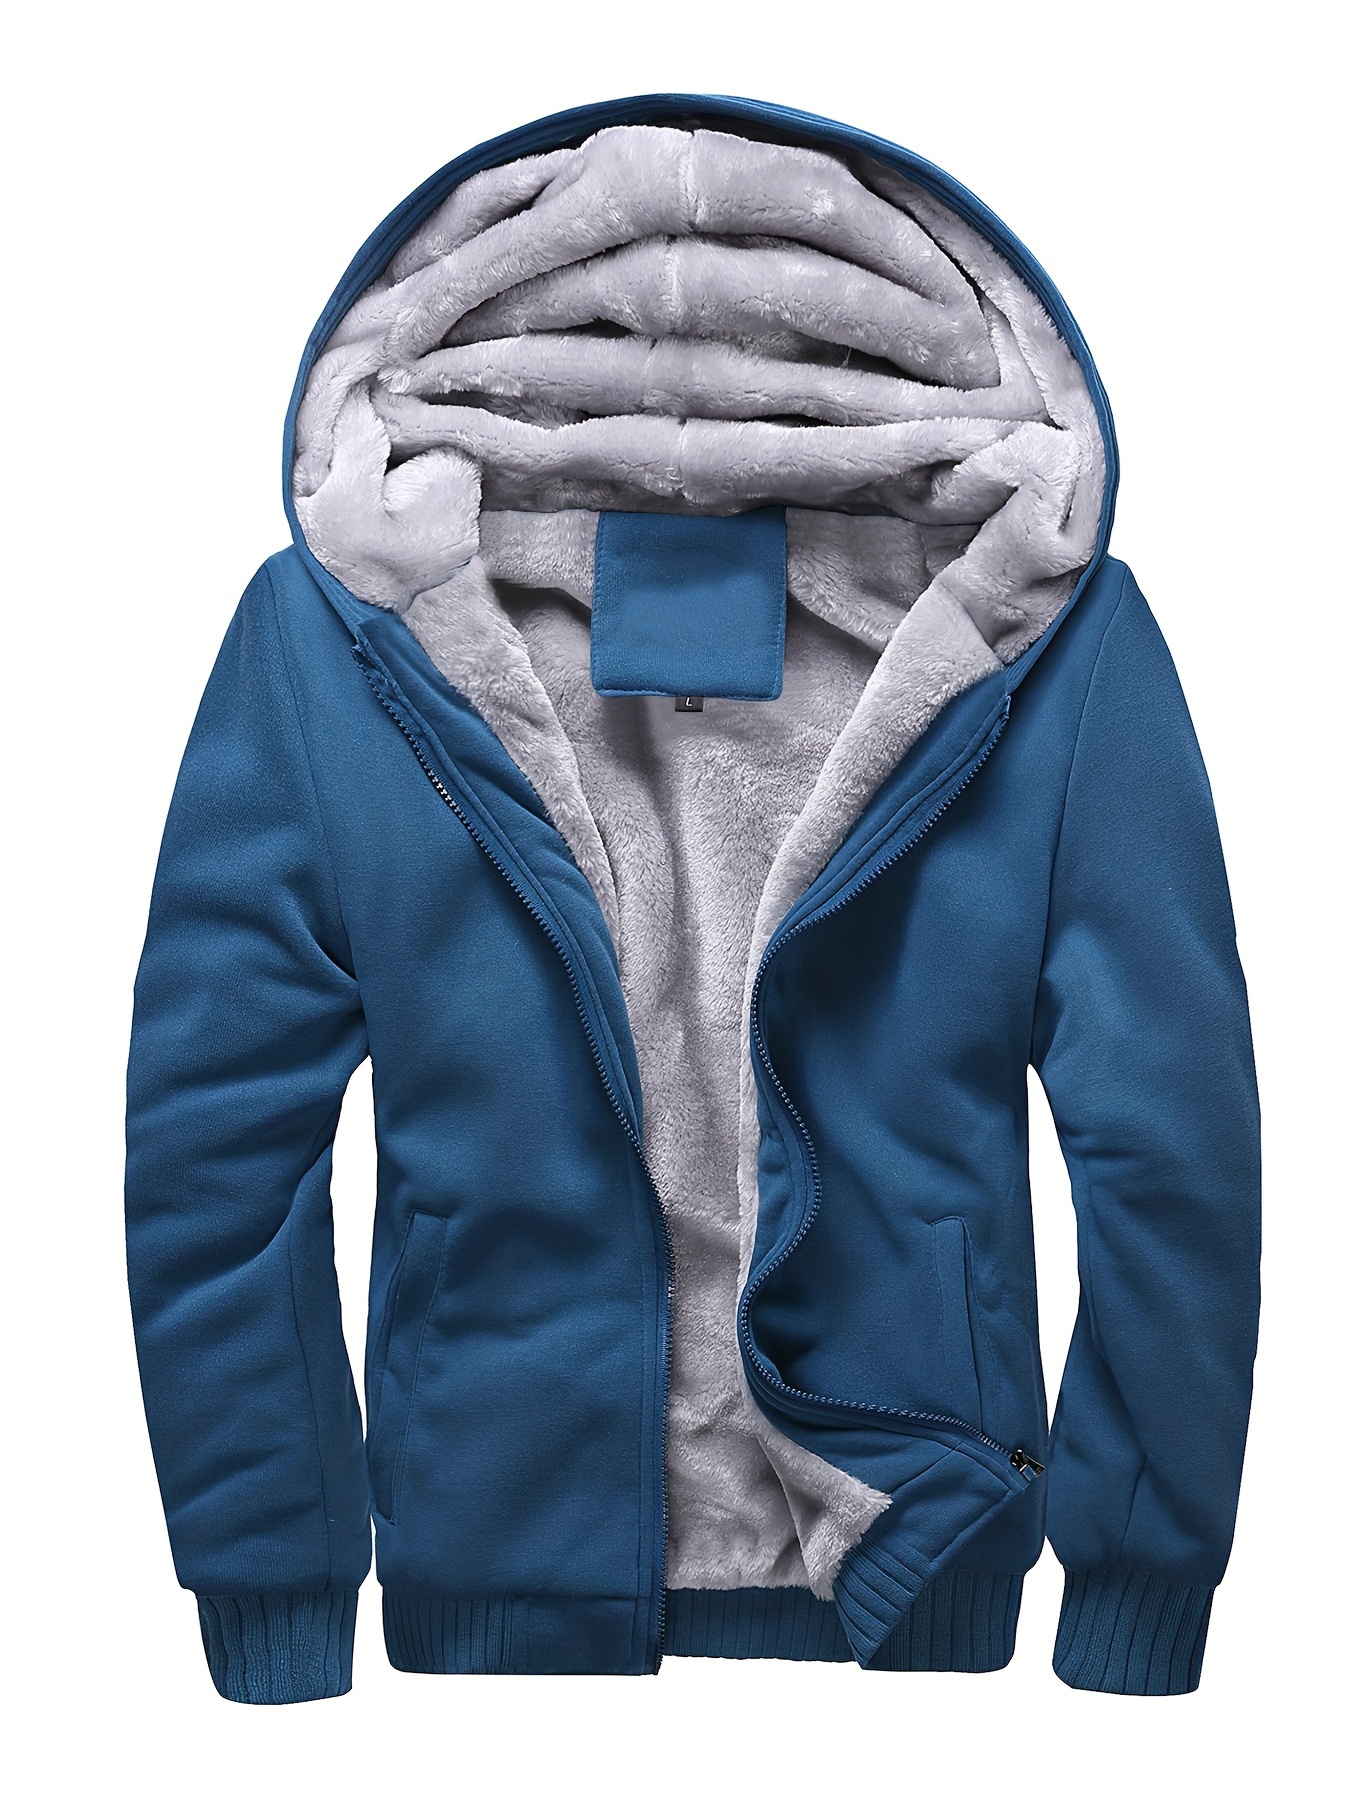 Comprar Chaqueta con capucha para hombre, abrigo informal de otoño e  invierno, chaqueta gruesa y cálida con forro polar, ropa de moda para  hombre, chaqueta con capucha